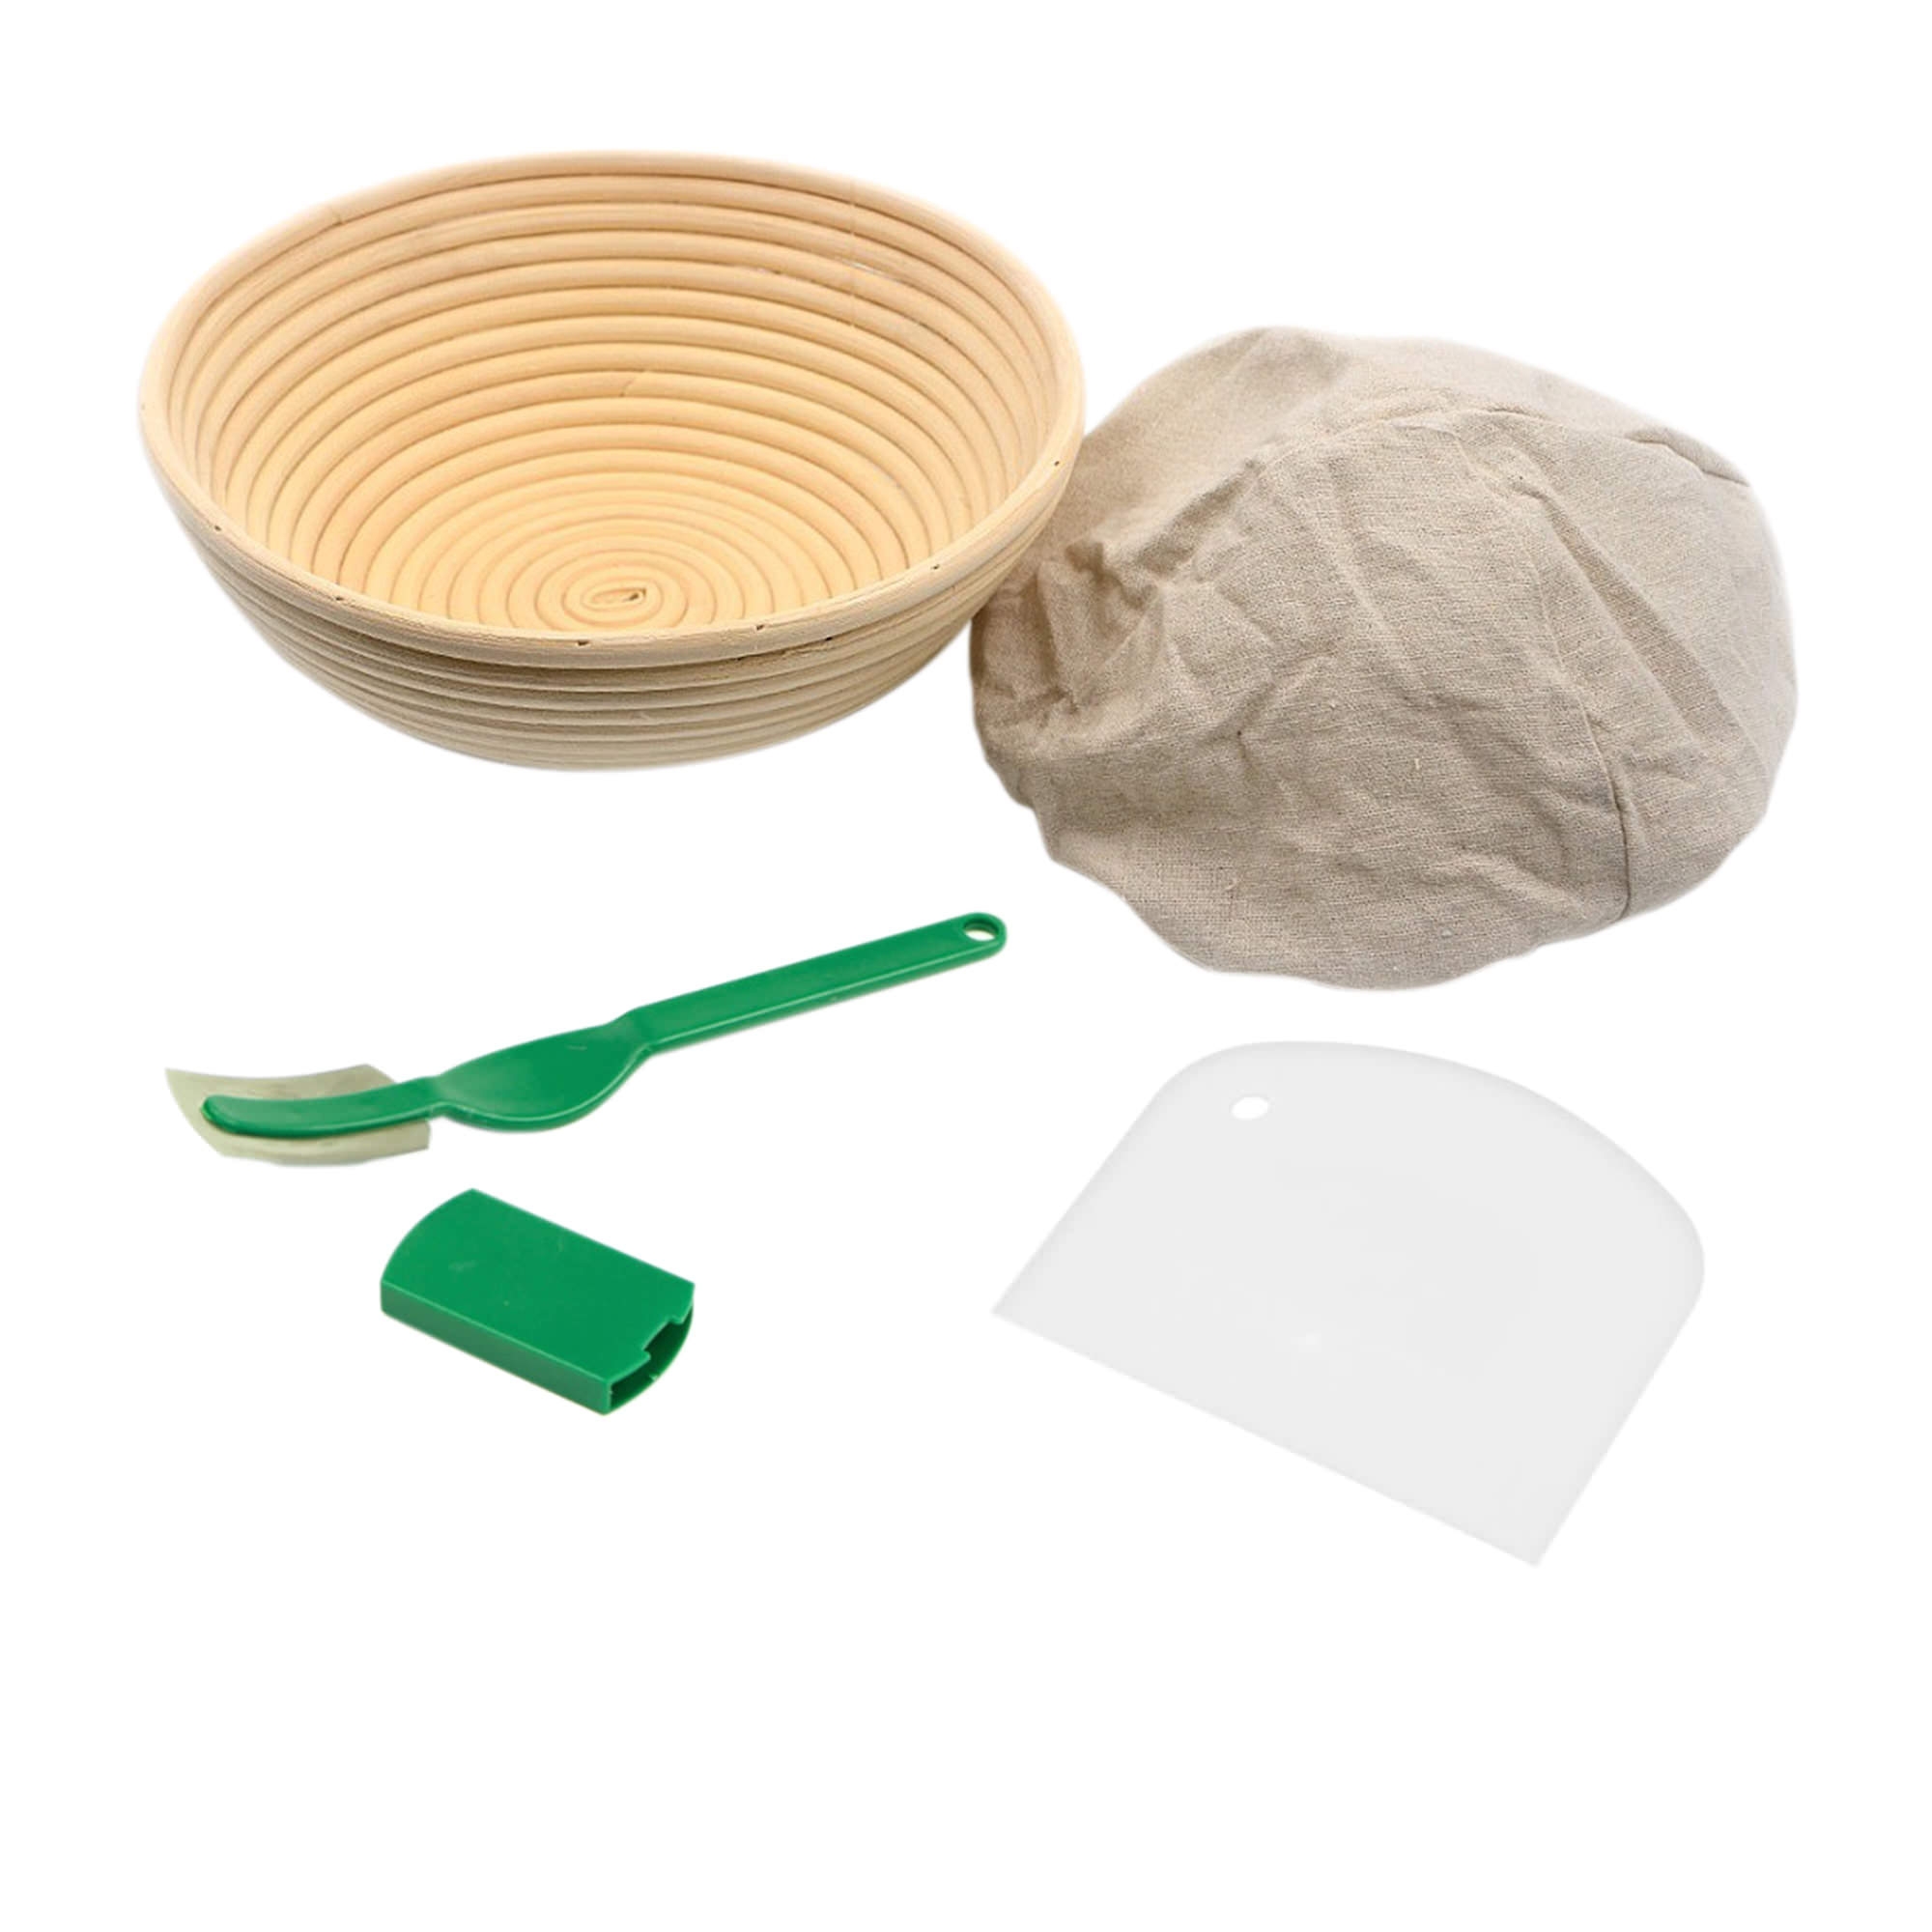 Brunswick Bakers Bread Baking Accessories Kit Image 1